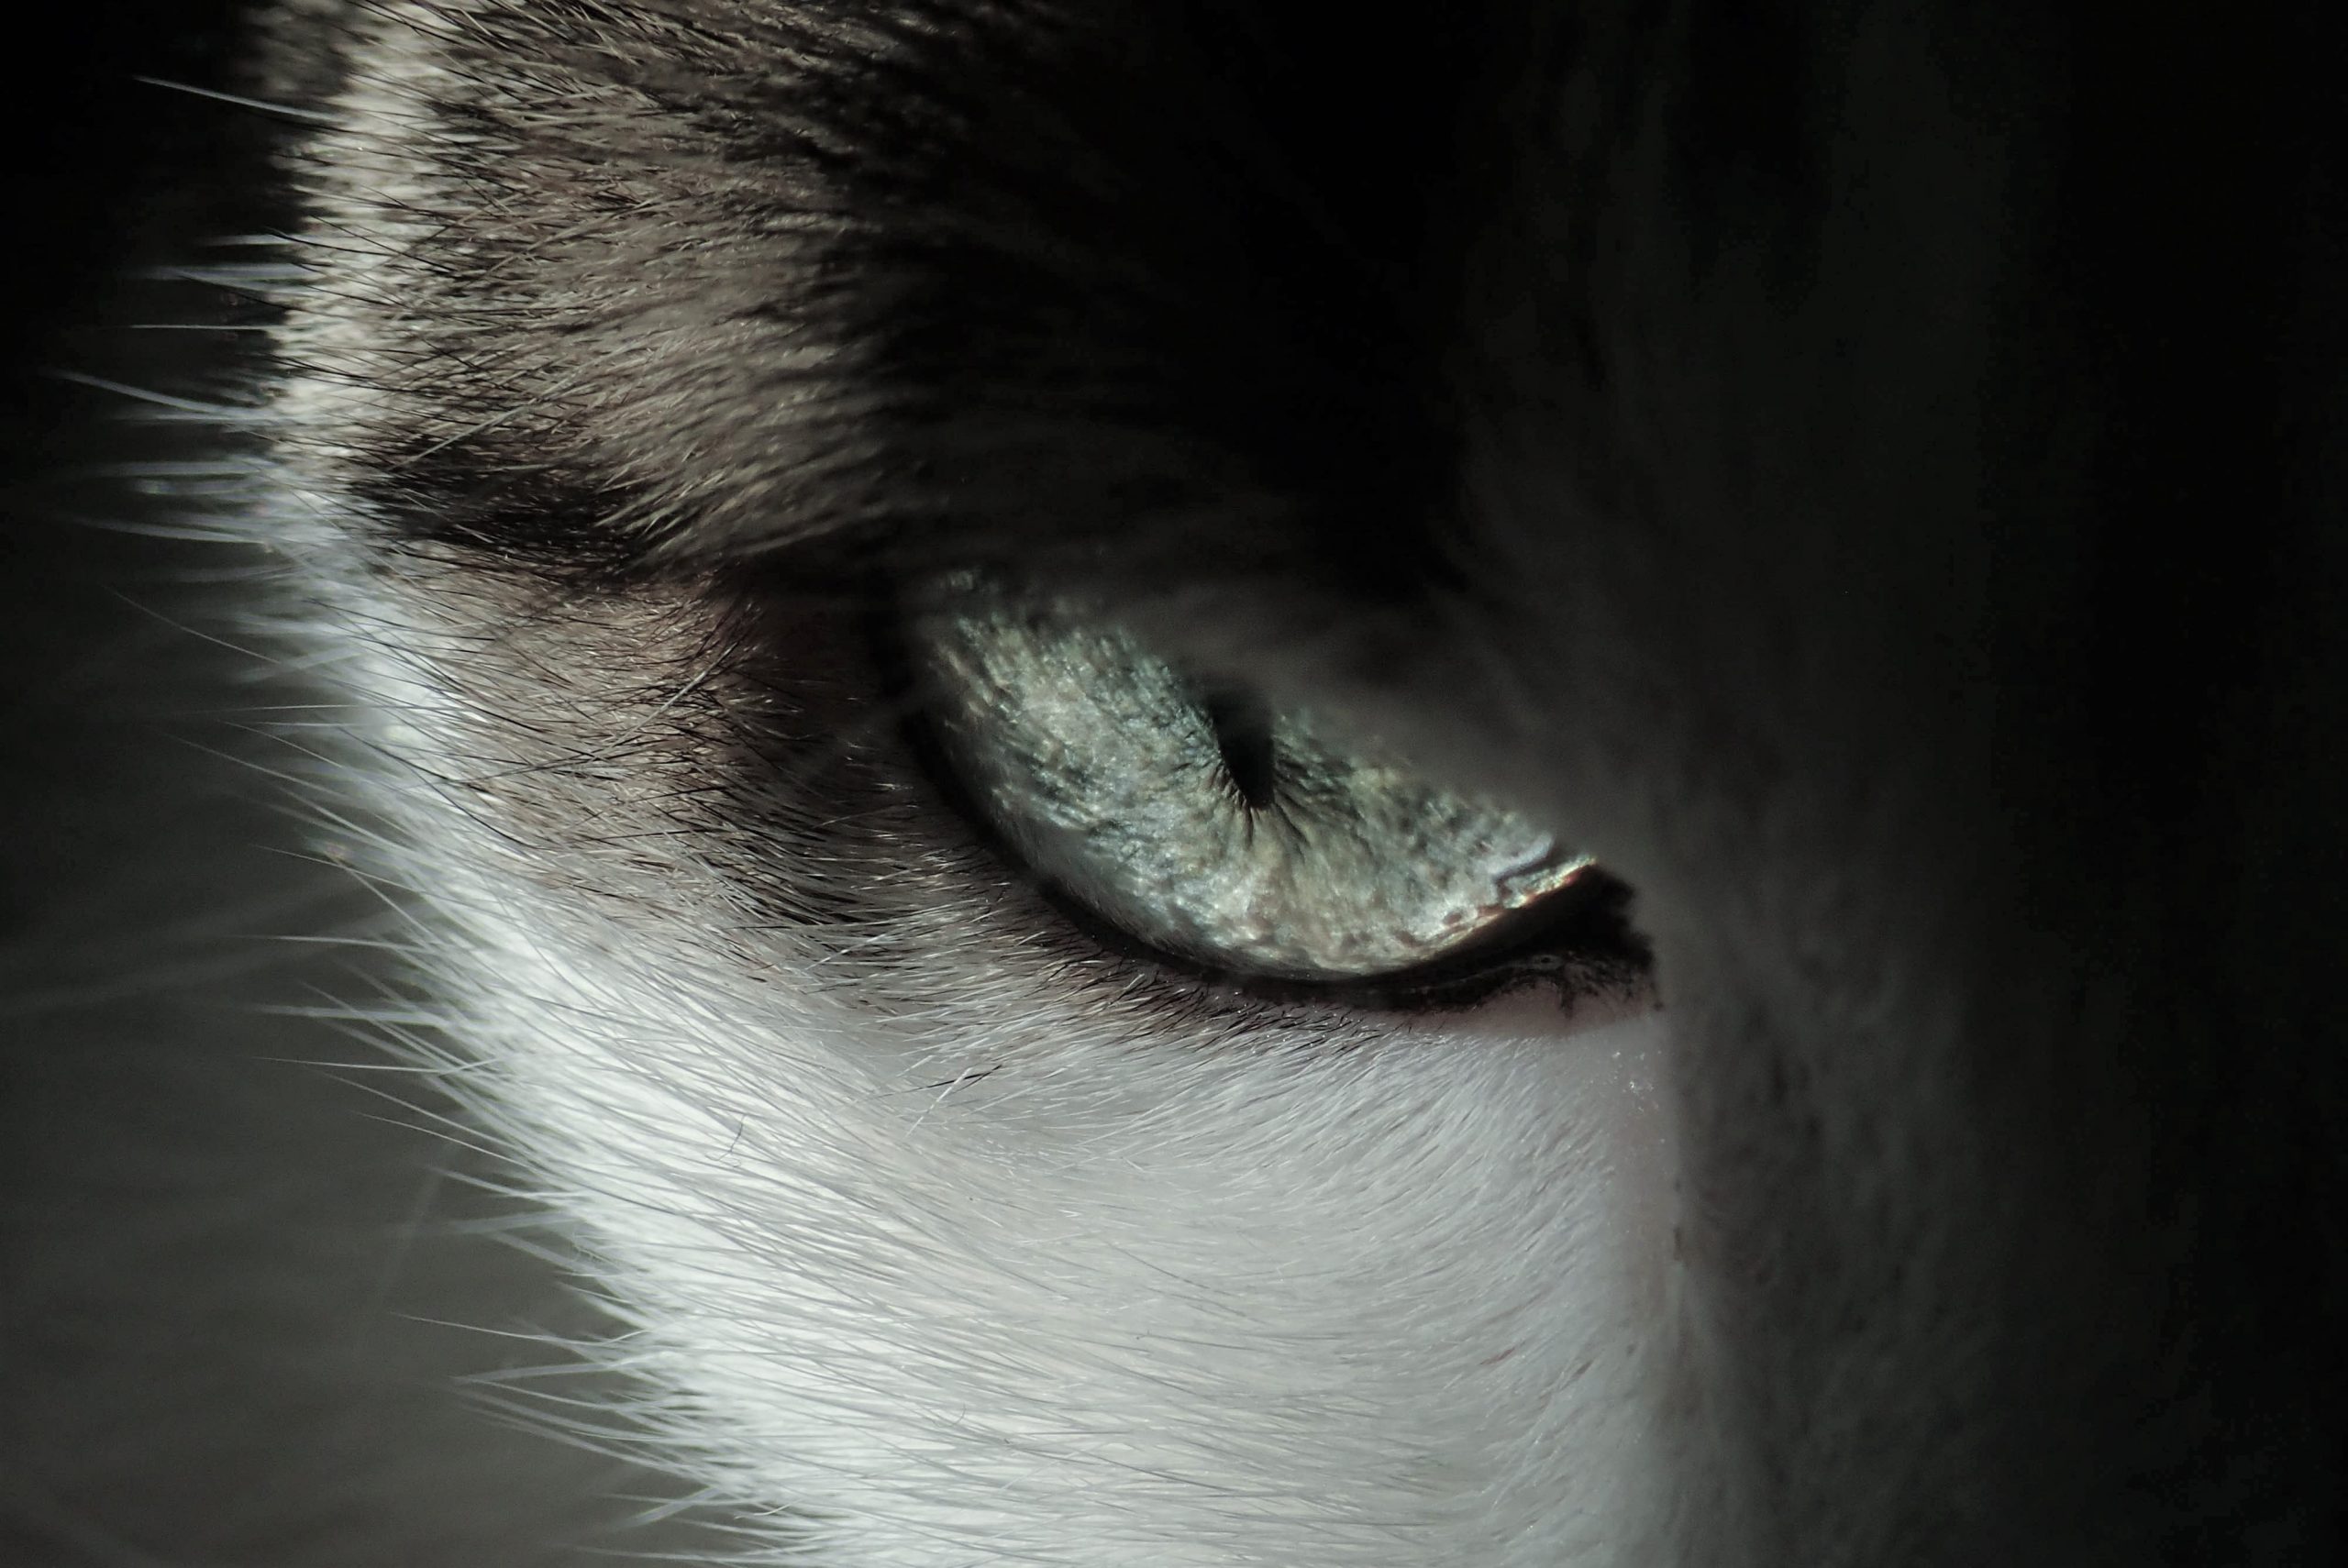 close-up-photo-of-cat-s-eye-3324591-scaled.jpg